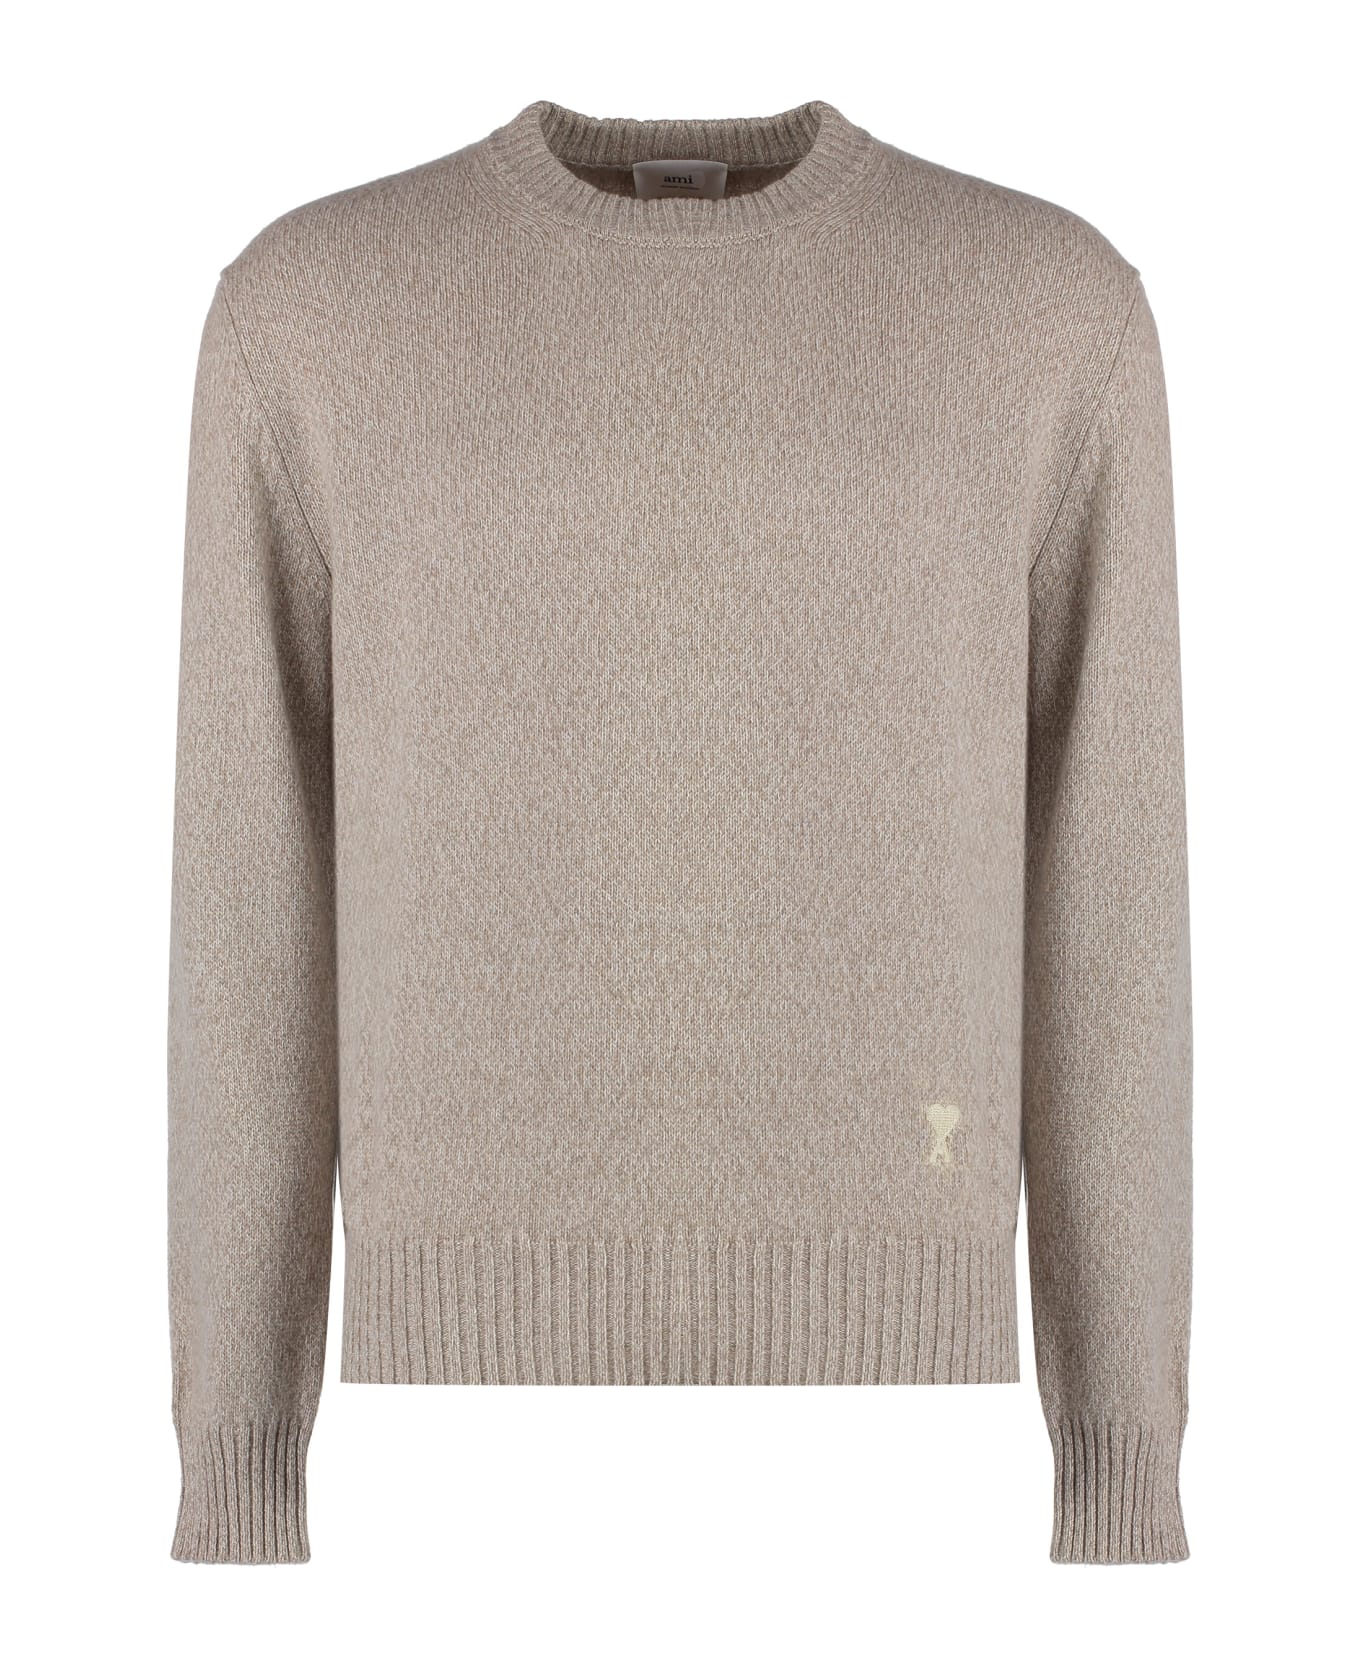 Ami Alexandre Mattiussi Wool And Cashmere Sweater - Beige ニットウェア